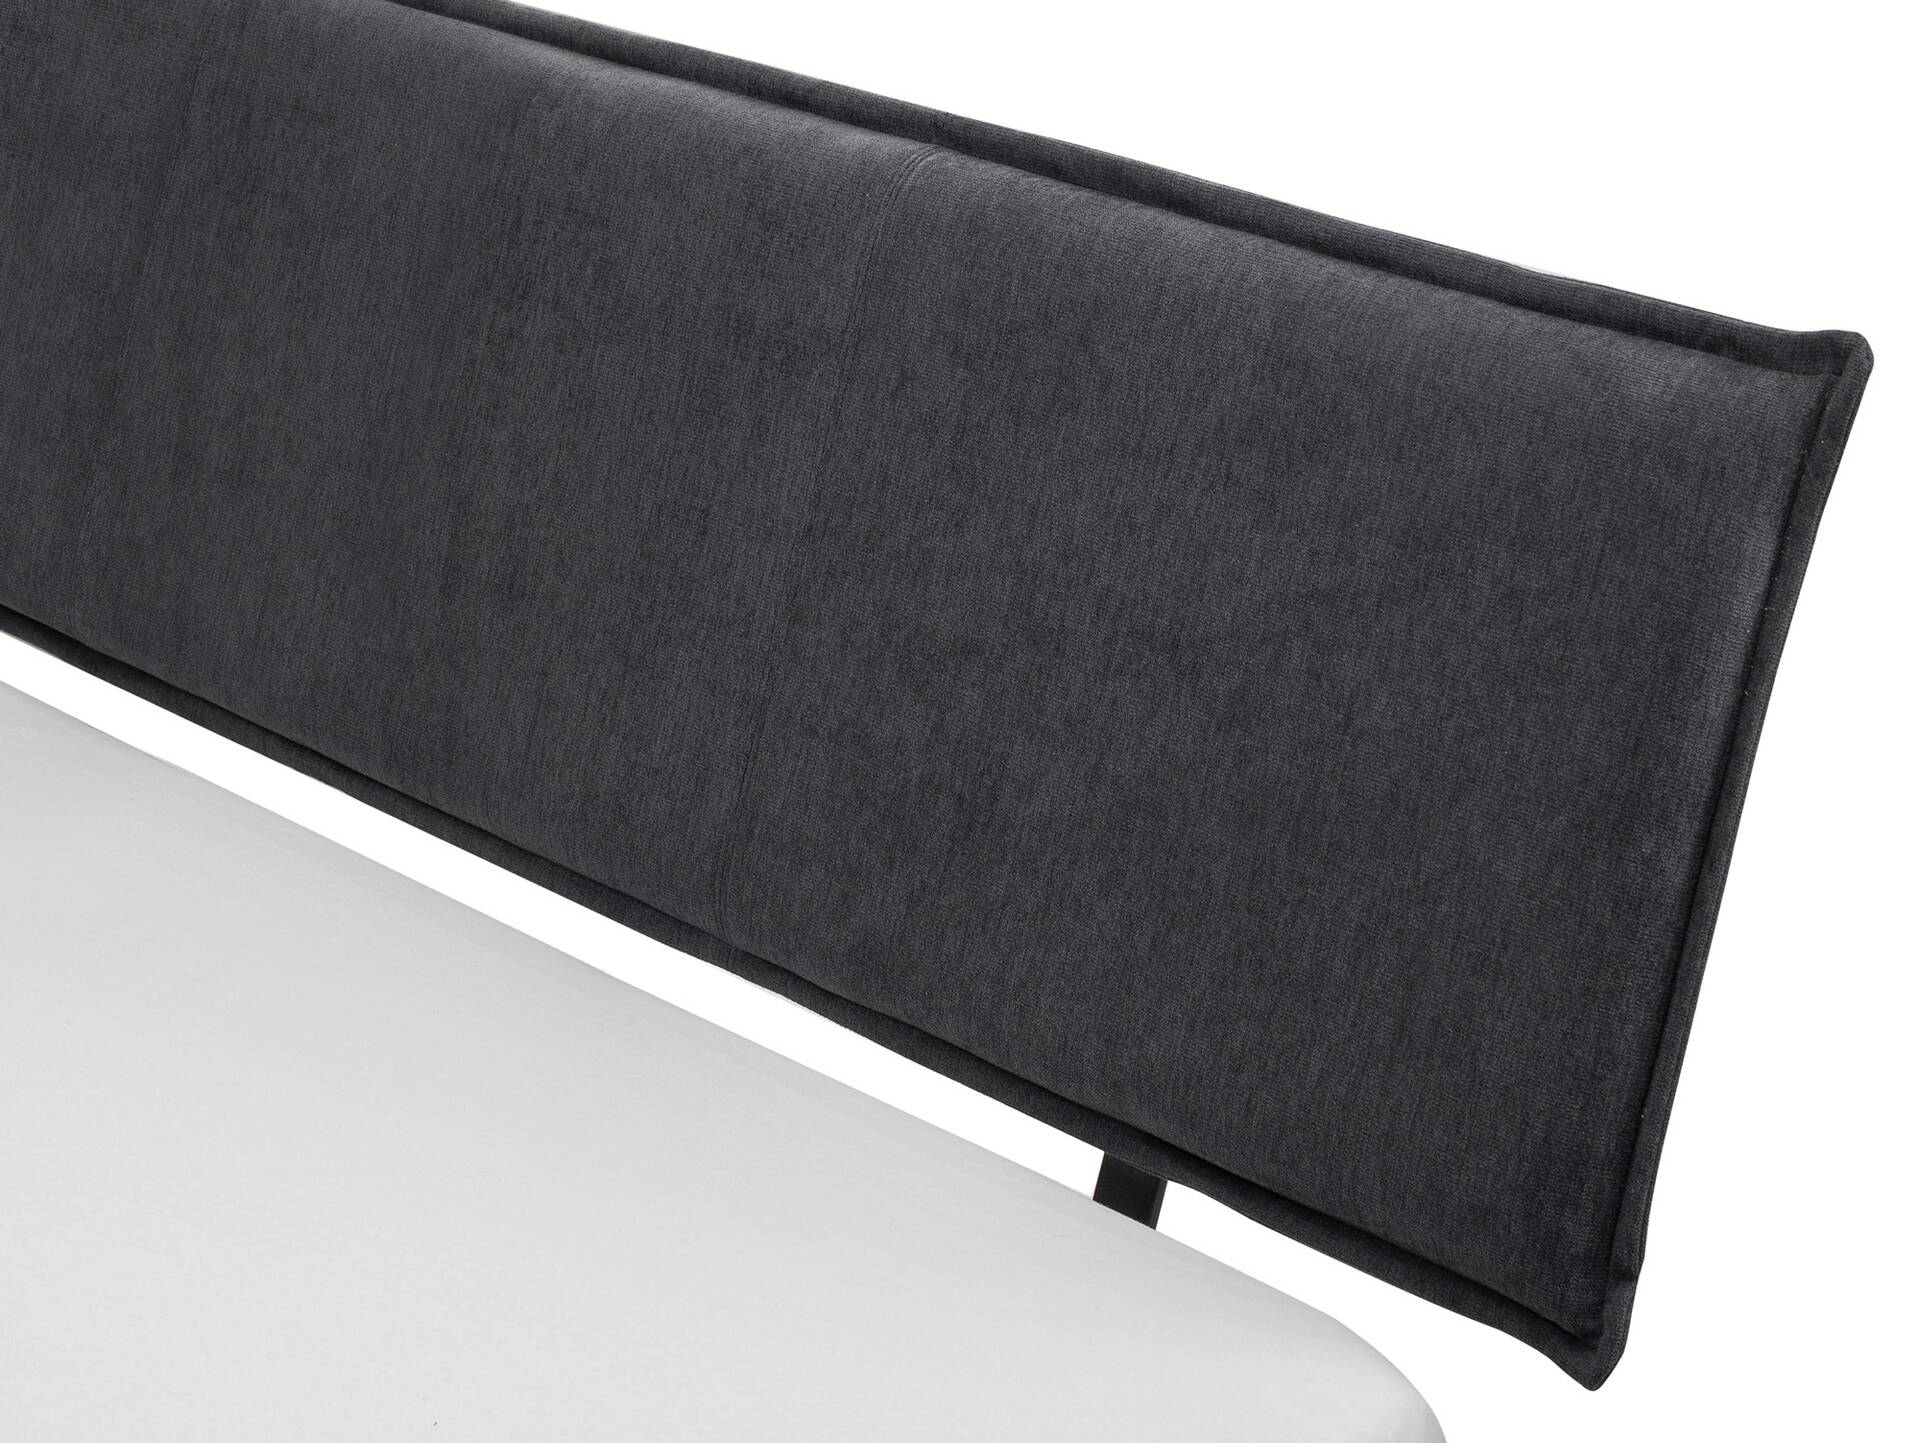 CALIDO 4-Fuß-Bett mit Polster-Kopfteil, Material Massivholz 90 x 220 cm | Buche geölt | Stoff Anthrazit | Komforthöhe